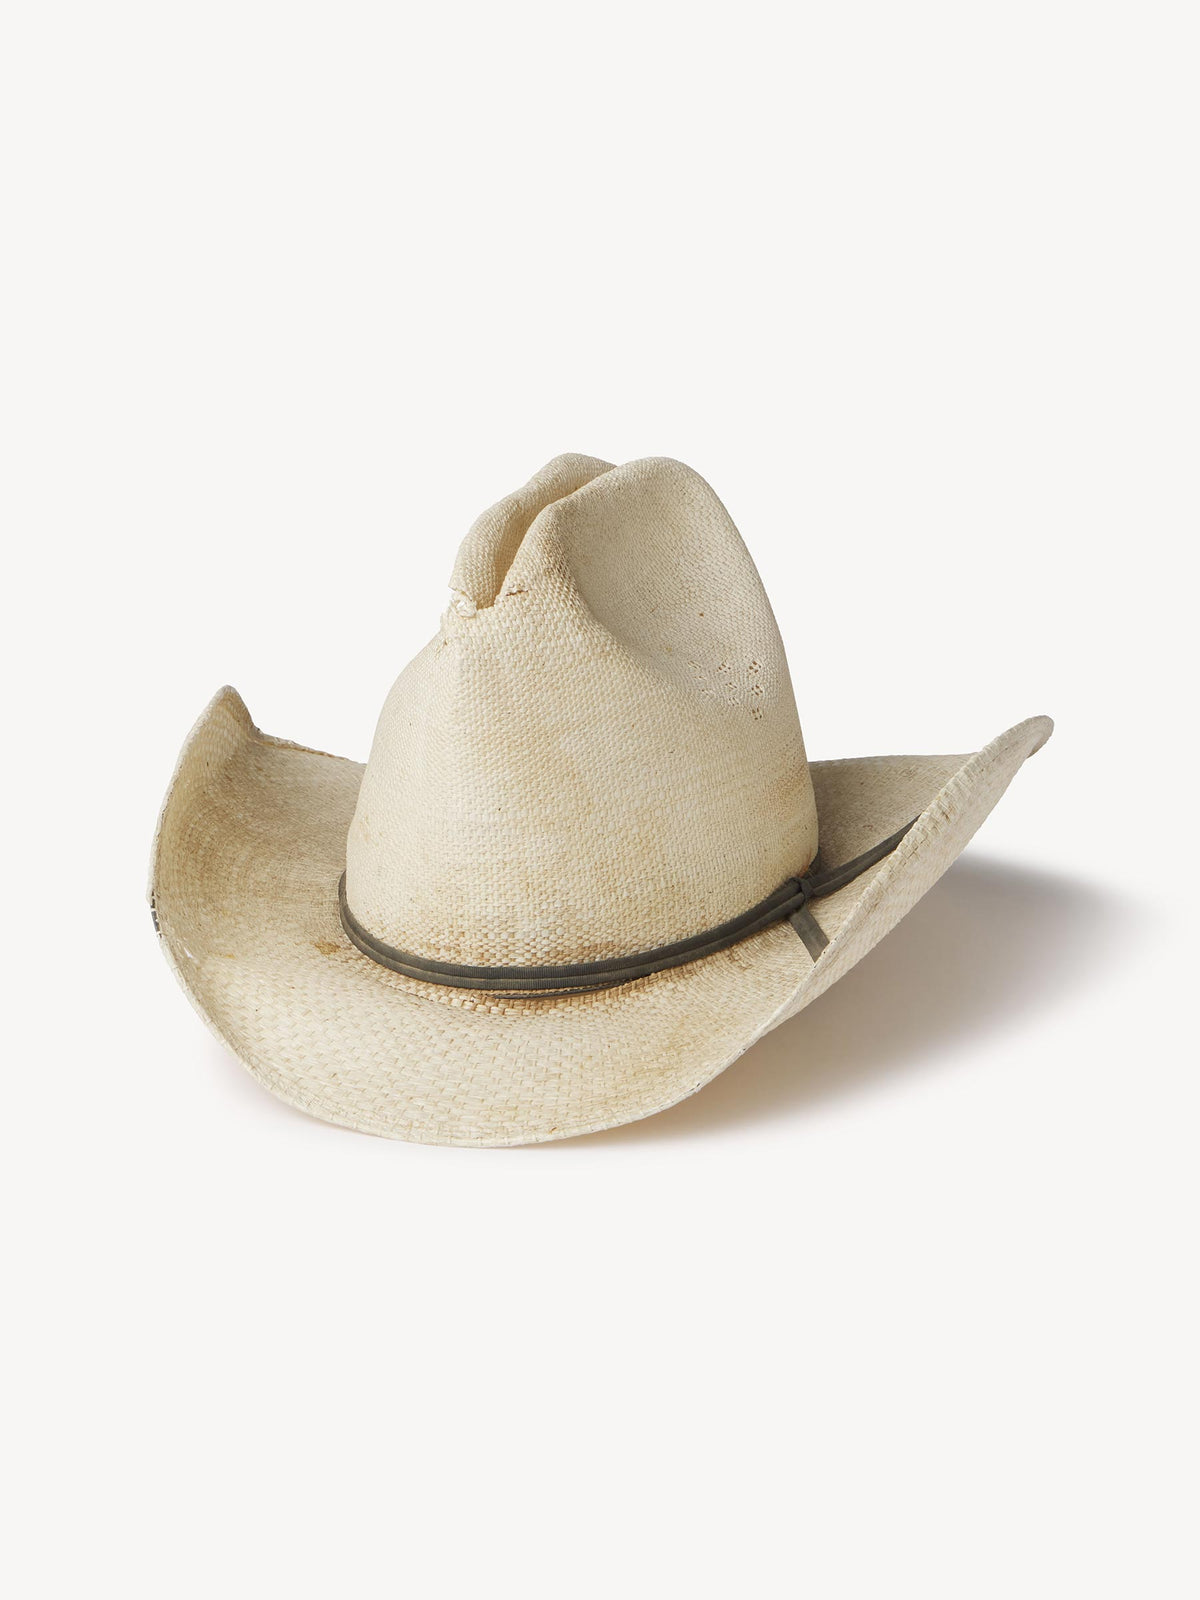 Cowboy Hat - 0268 - Product Flat